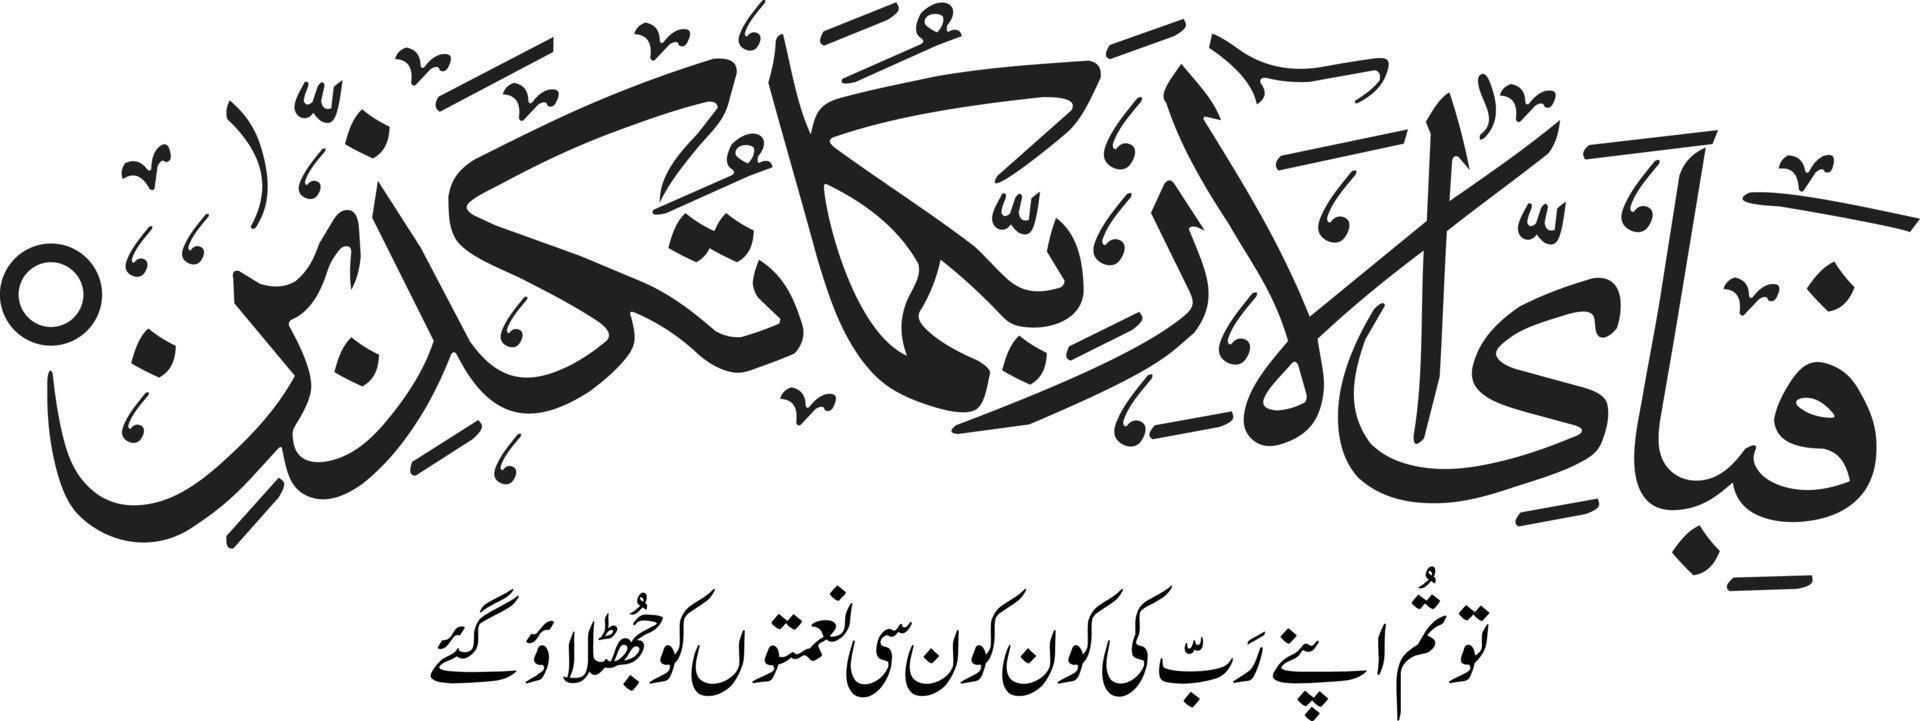 vetor livre de caligrafia urdu islâmica arbi